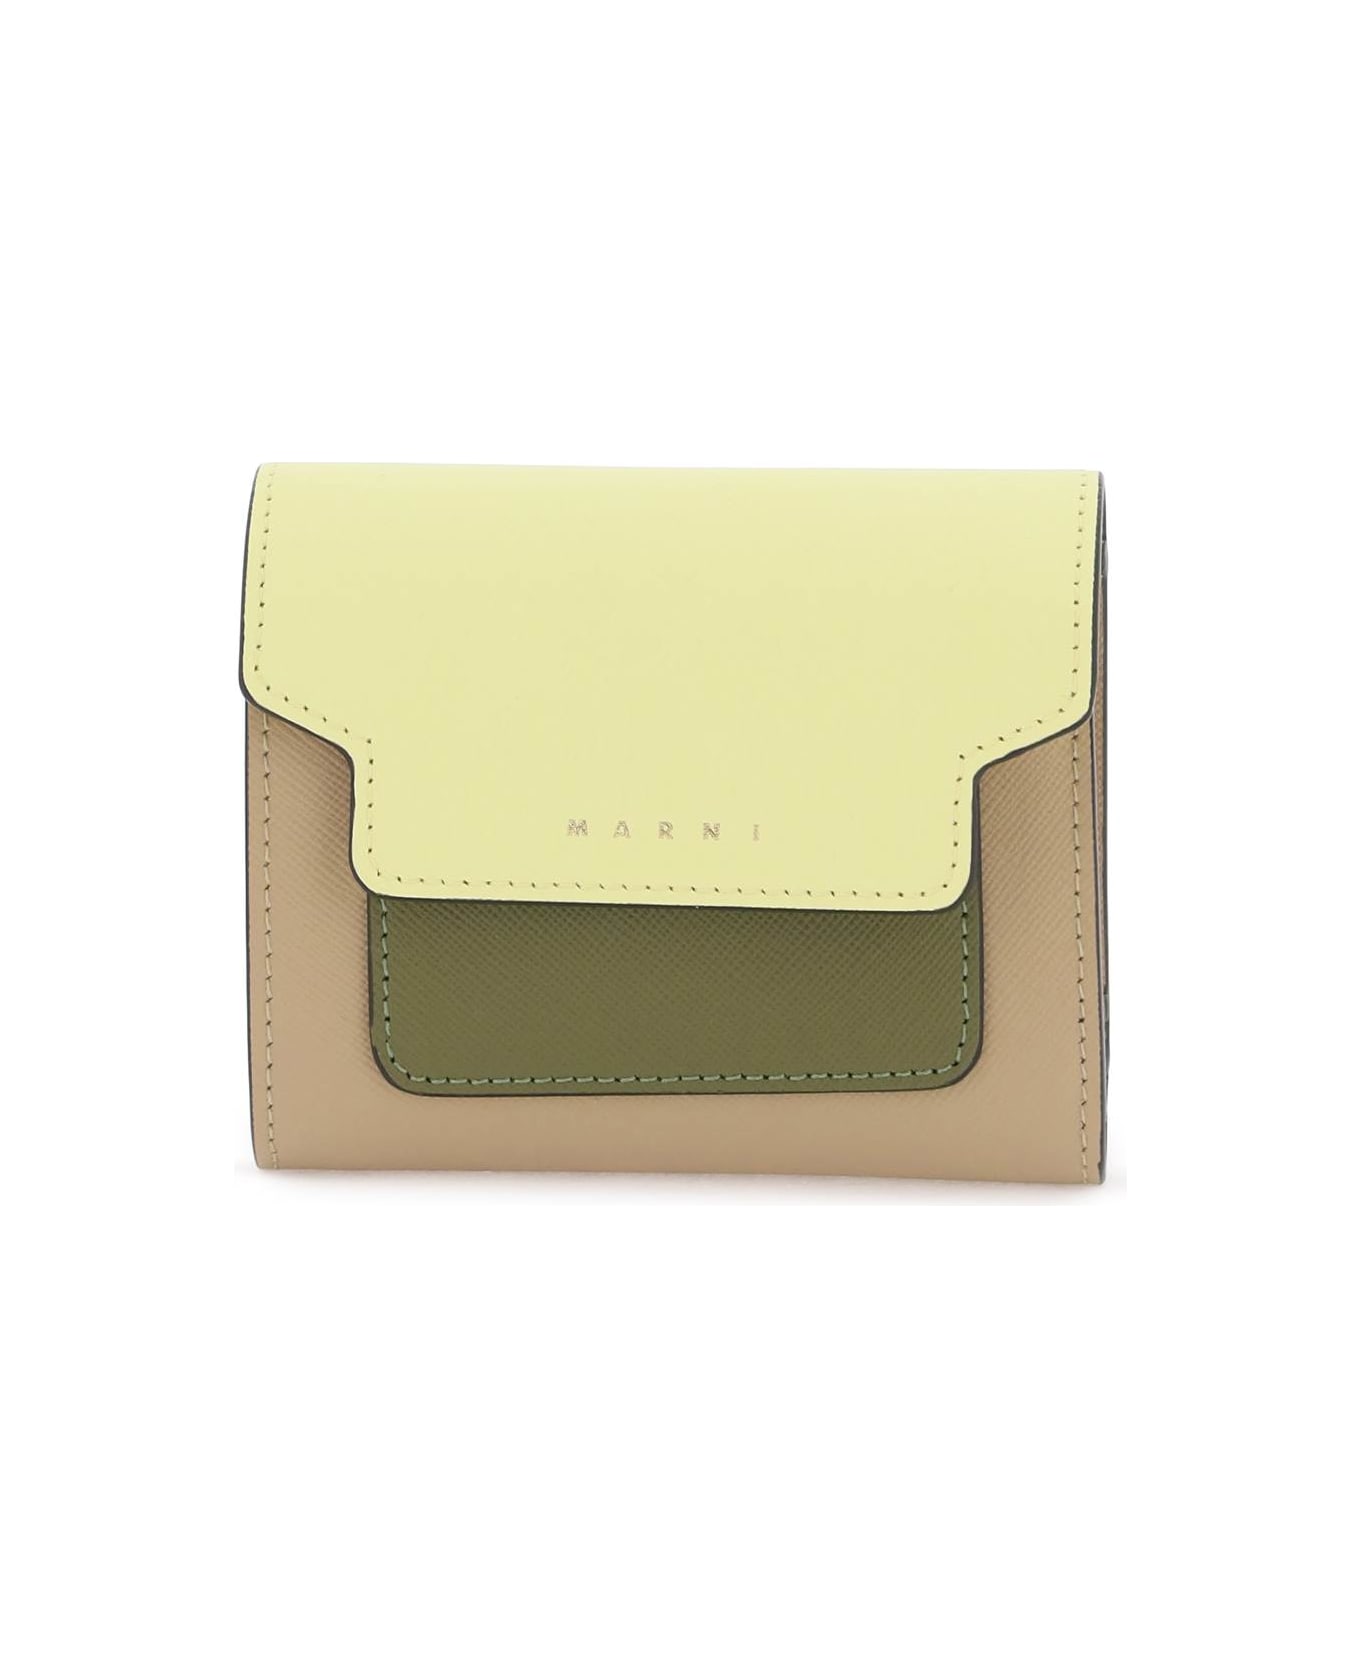 Marni Bi-fold Wallet With Flap - VANILLA OLIVE SOFT BEIGE (Beige)